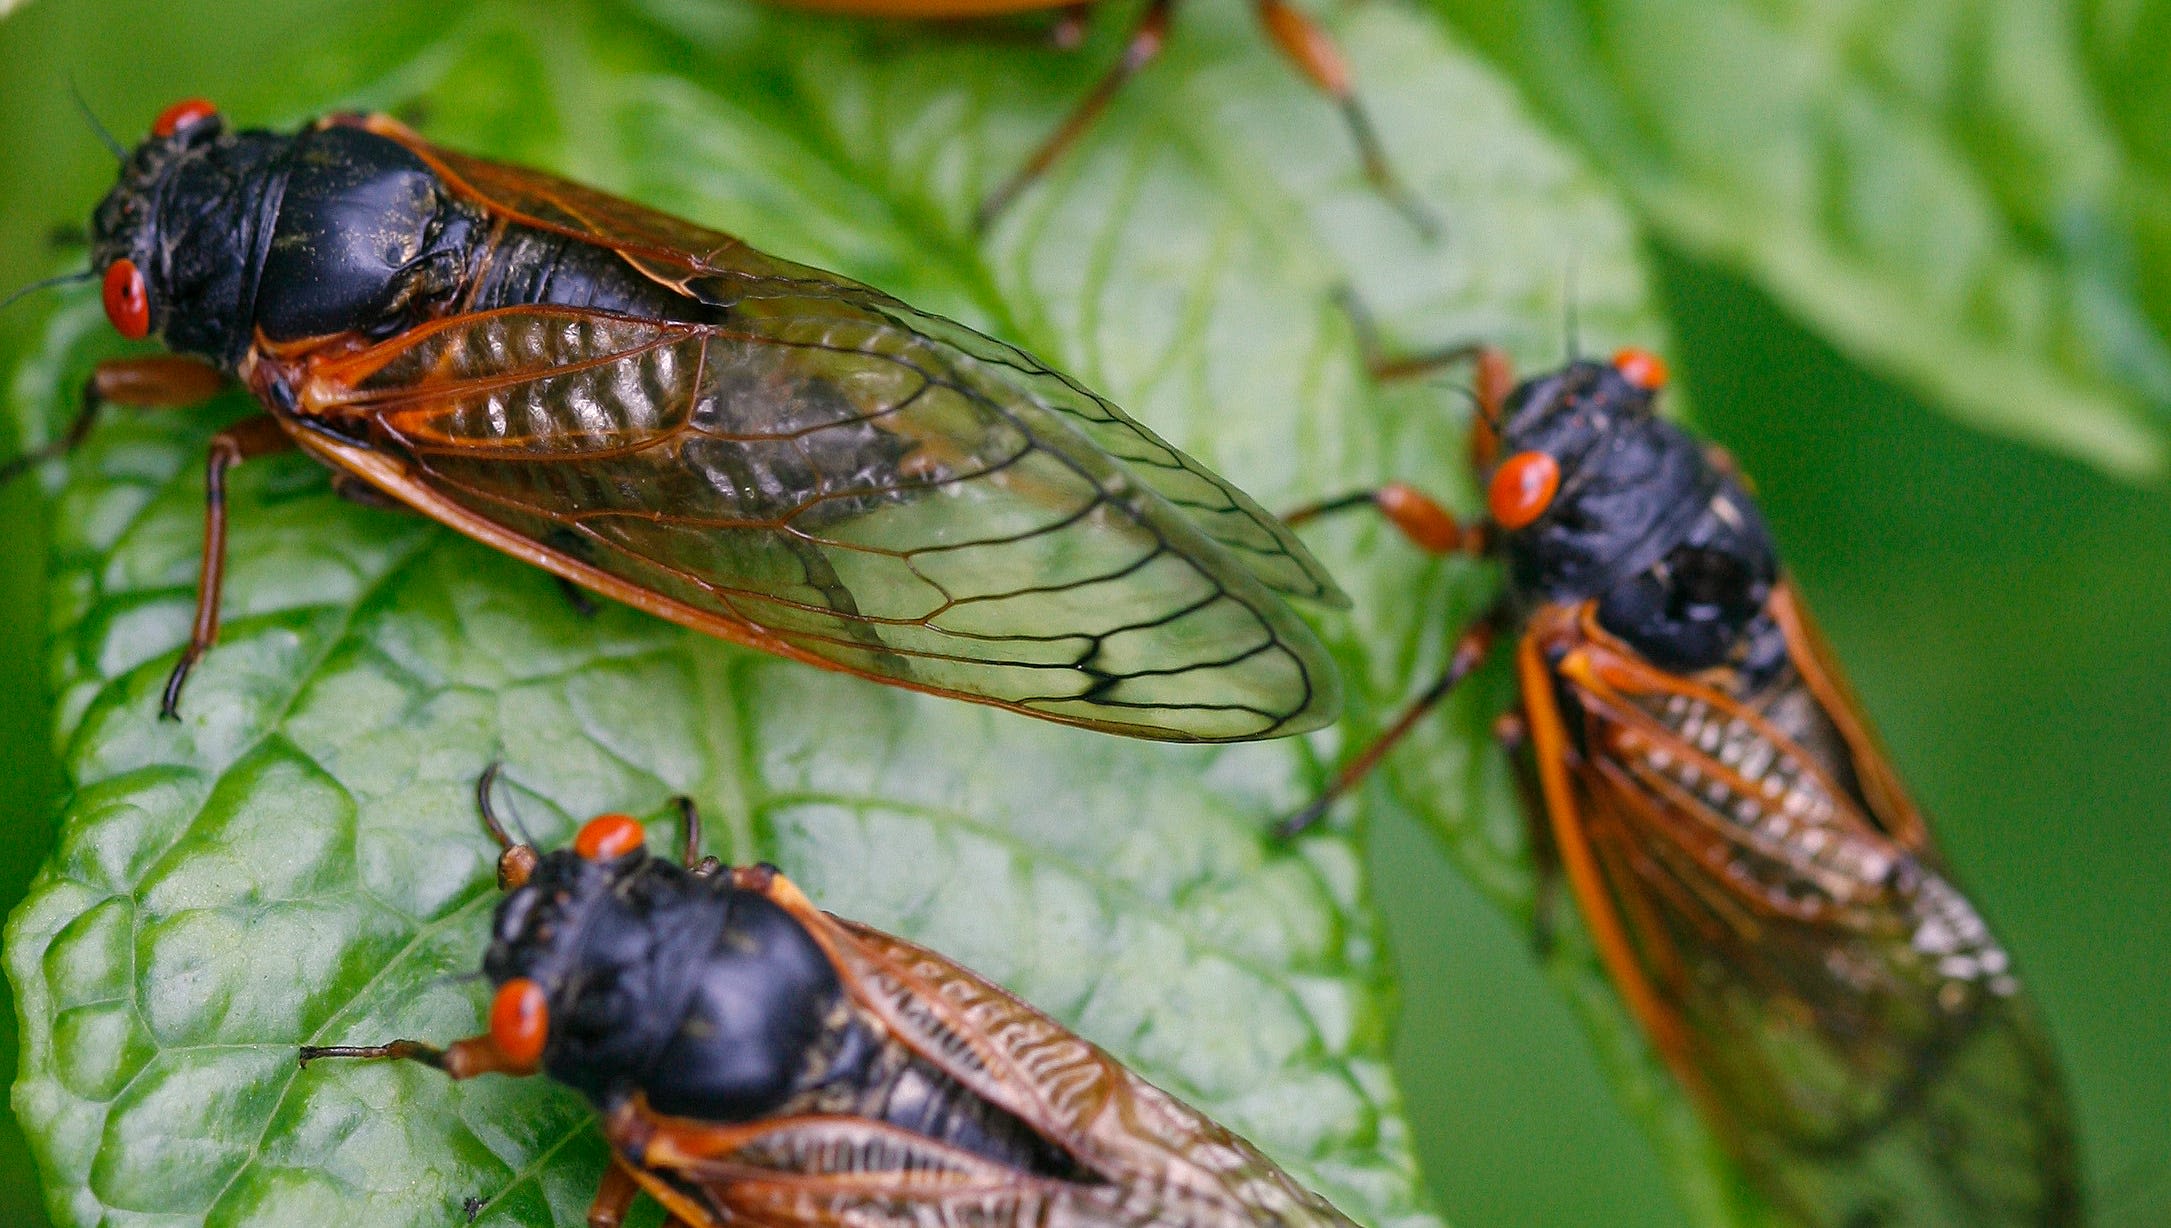 What animals eat cicadas?